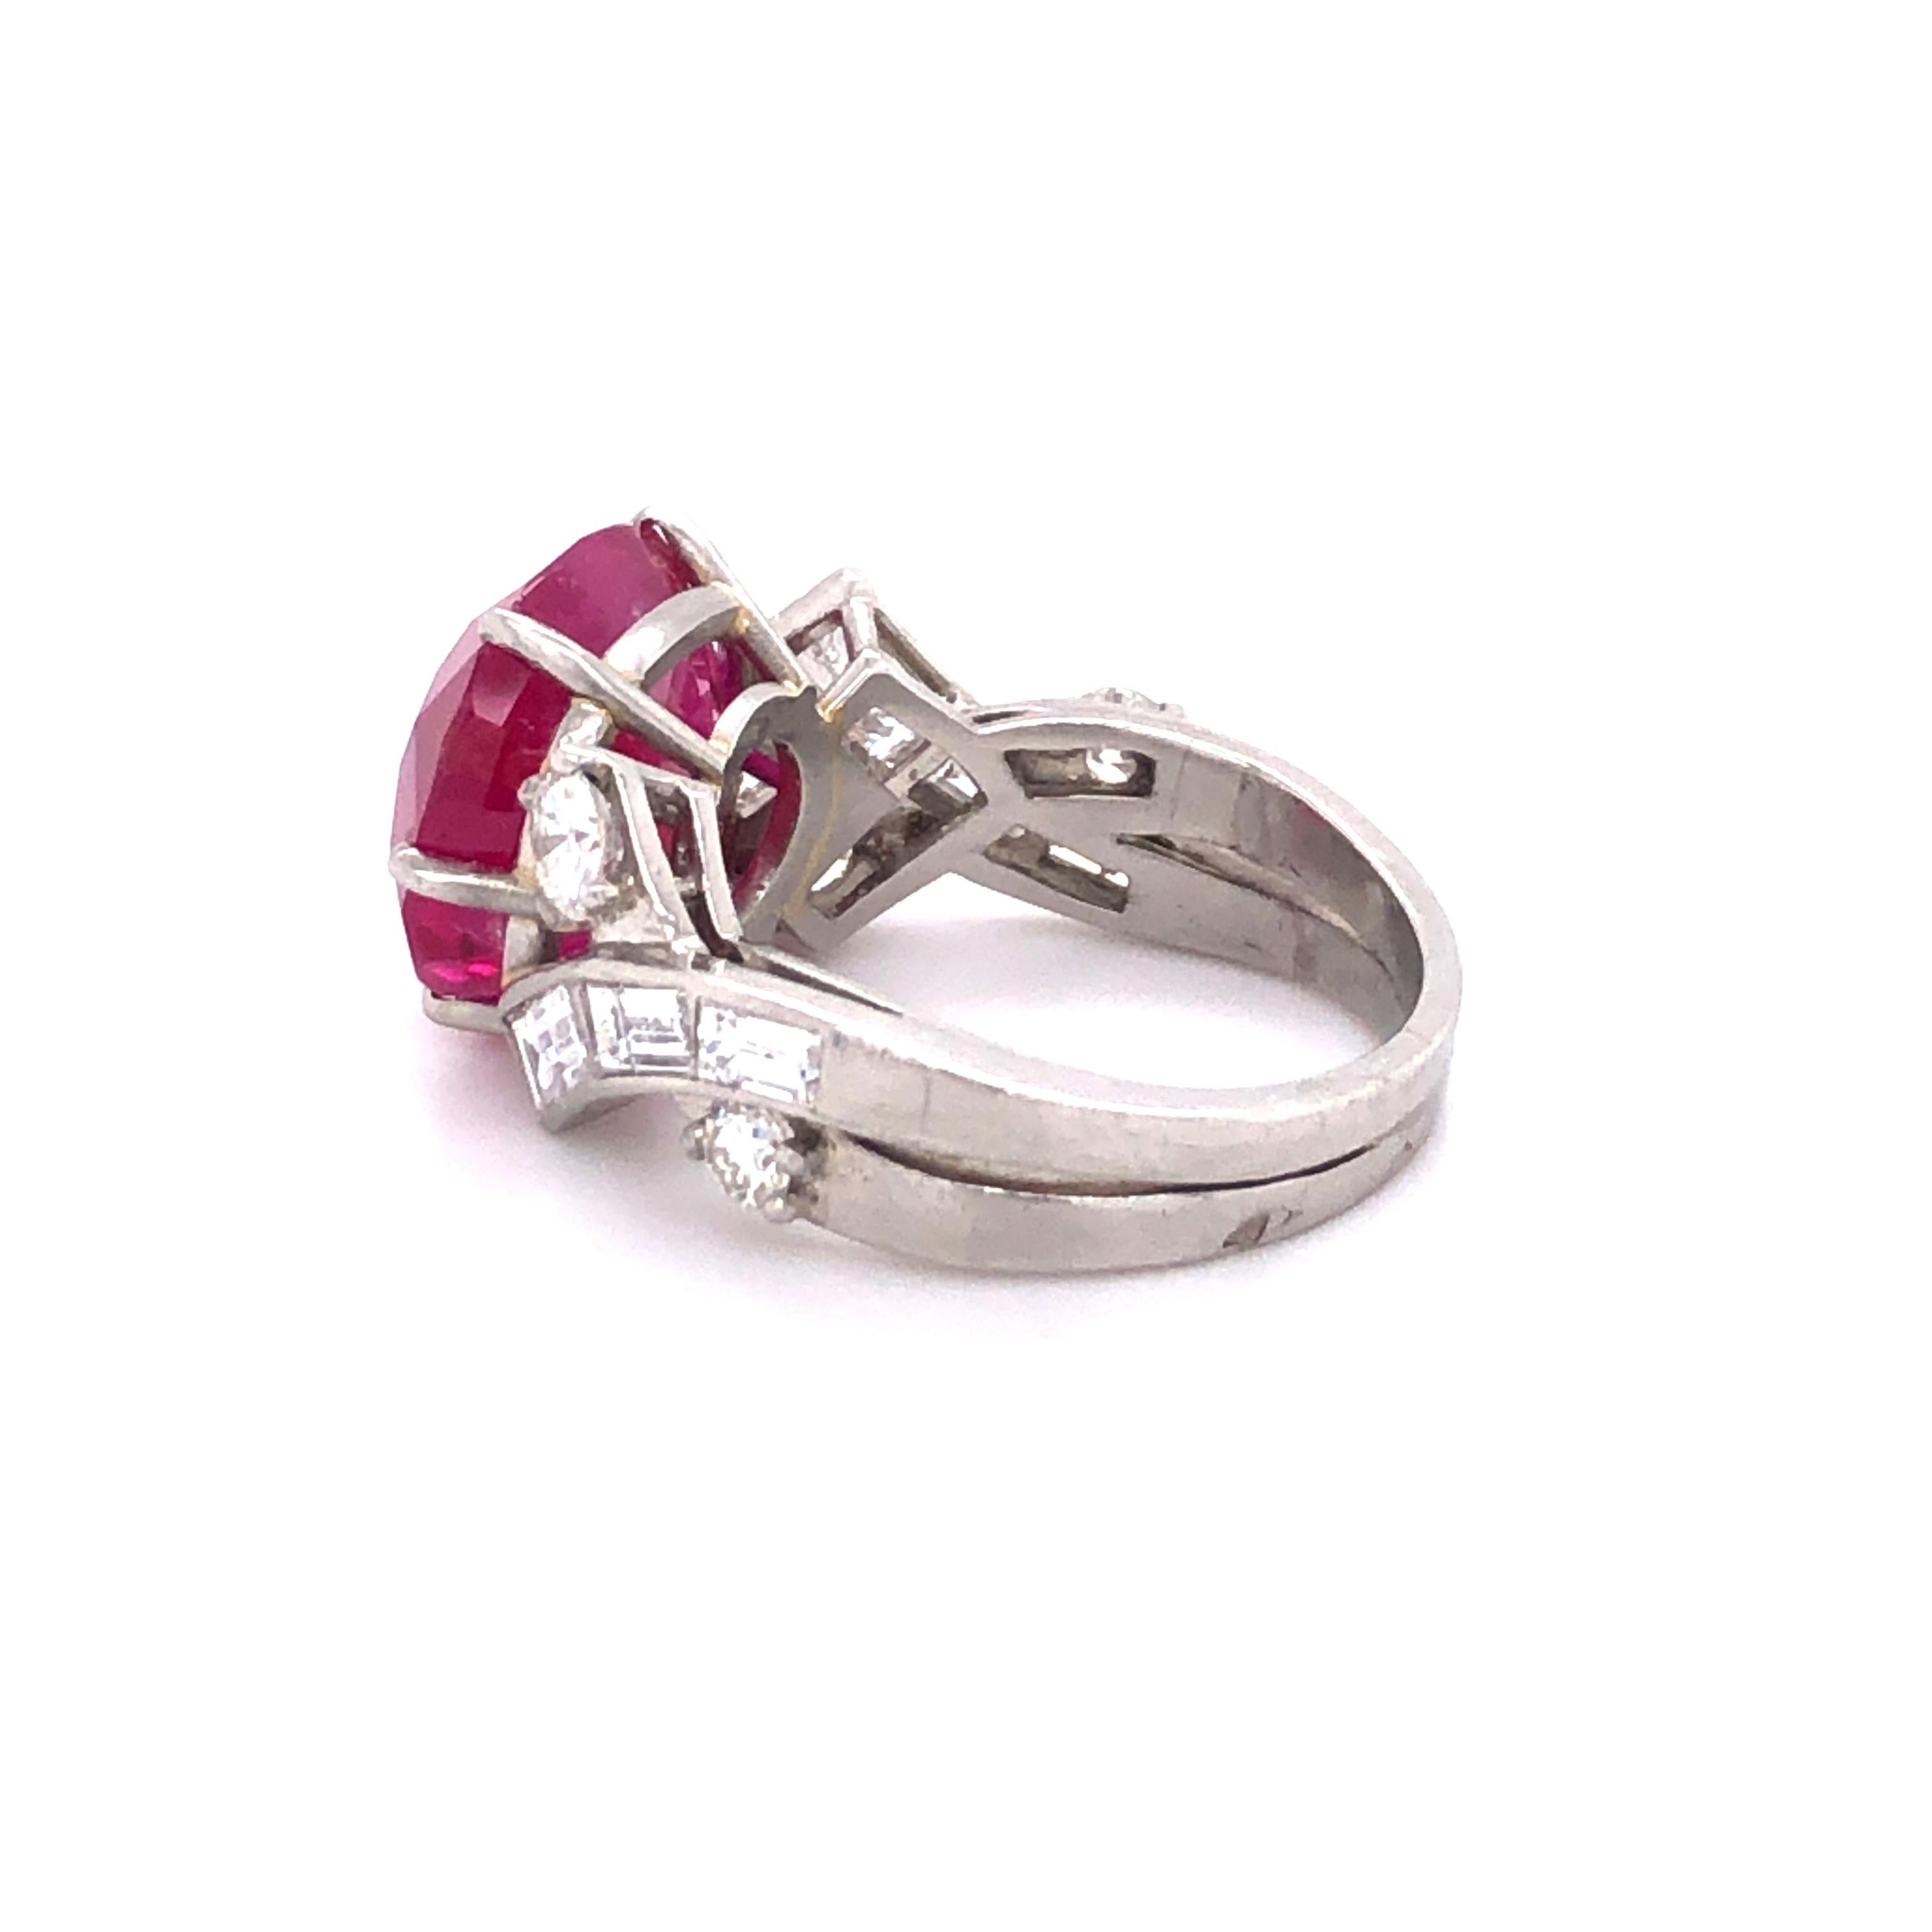 Women's or Men's Stunning 10.40 Carat Burma Ruby and Diamond Ring in Platinum 950